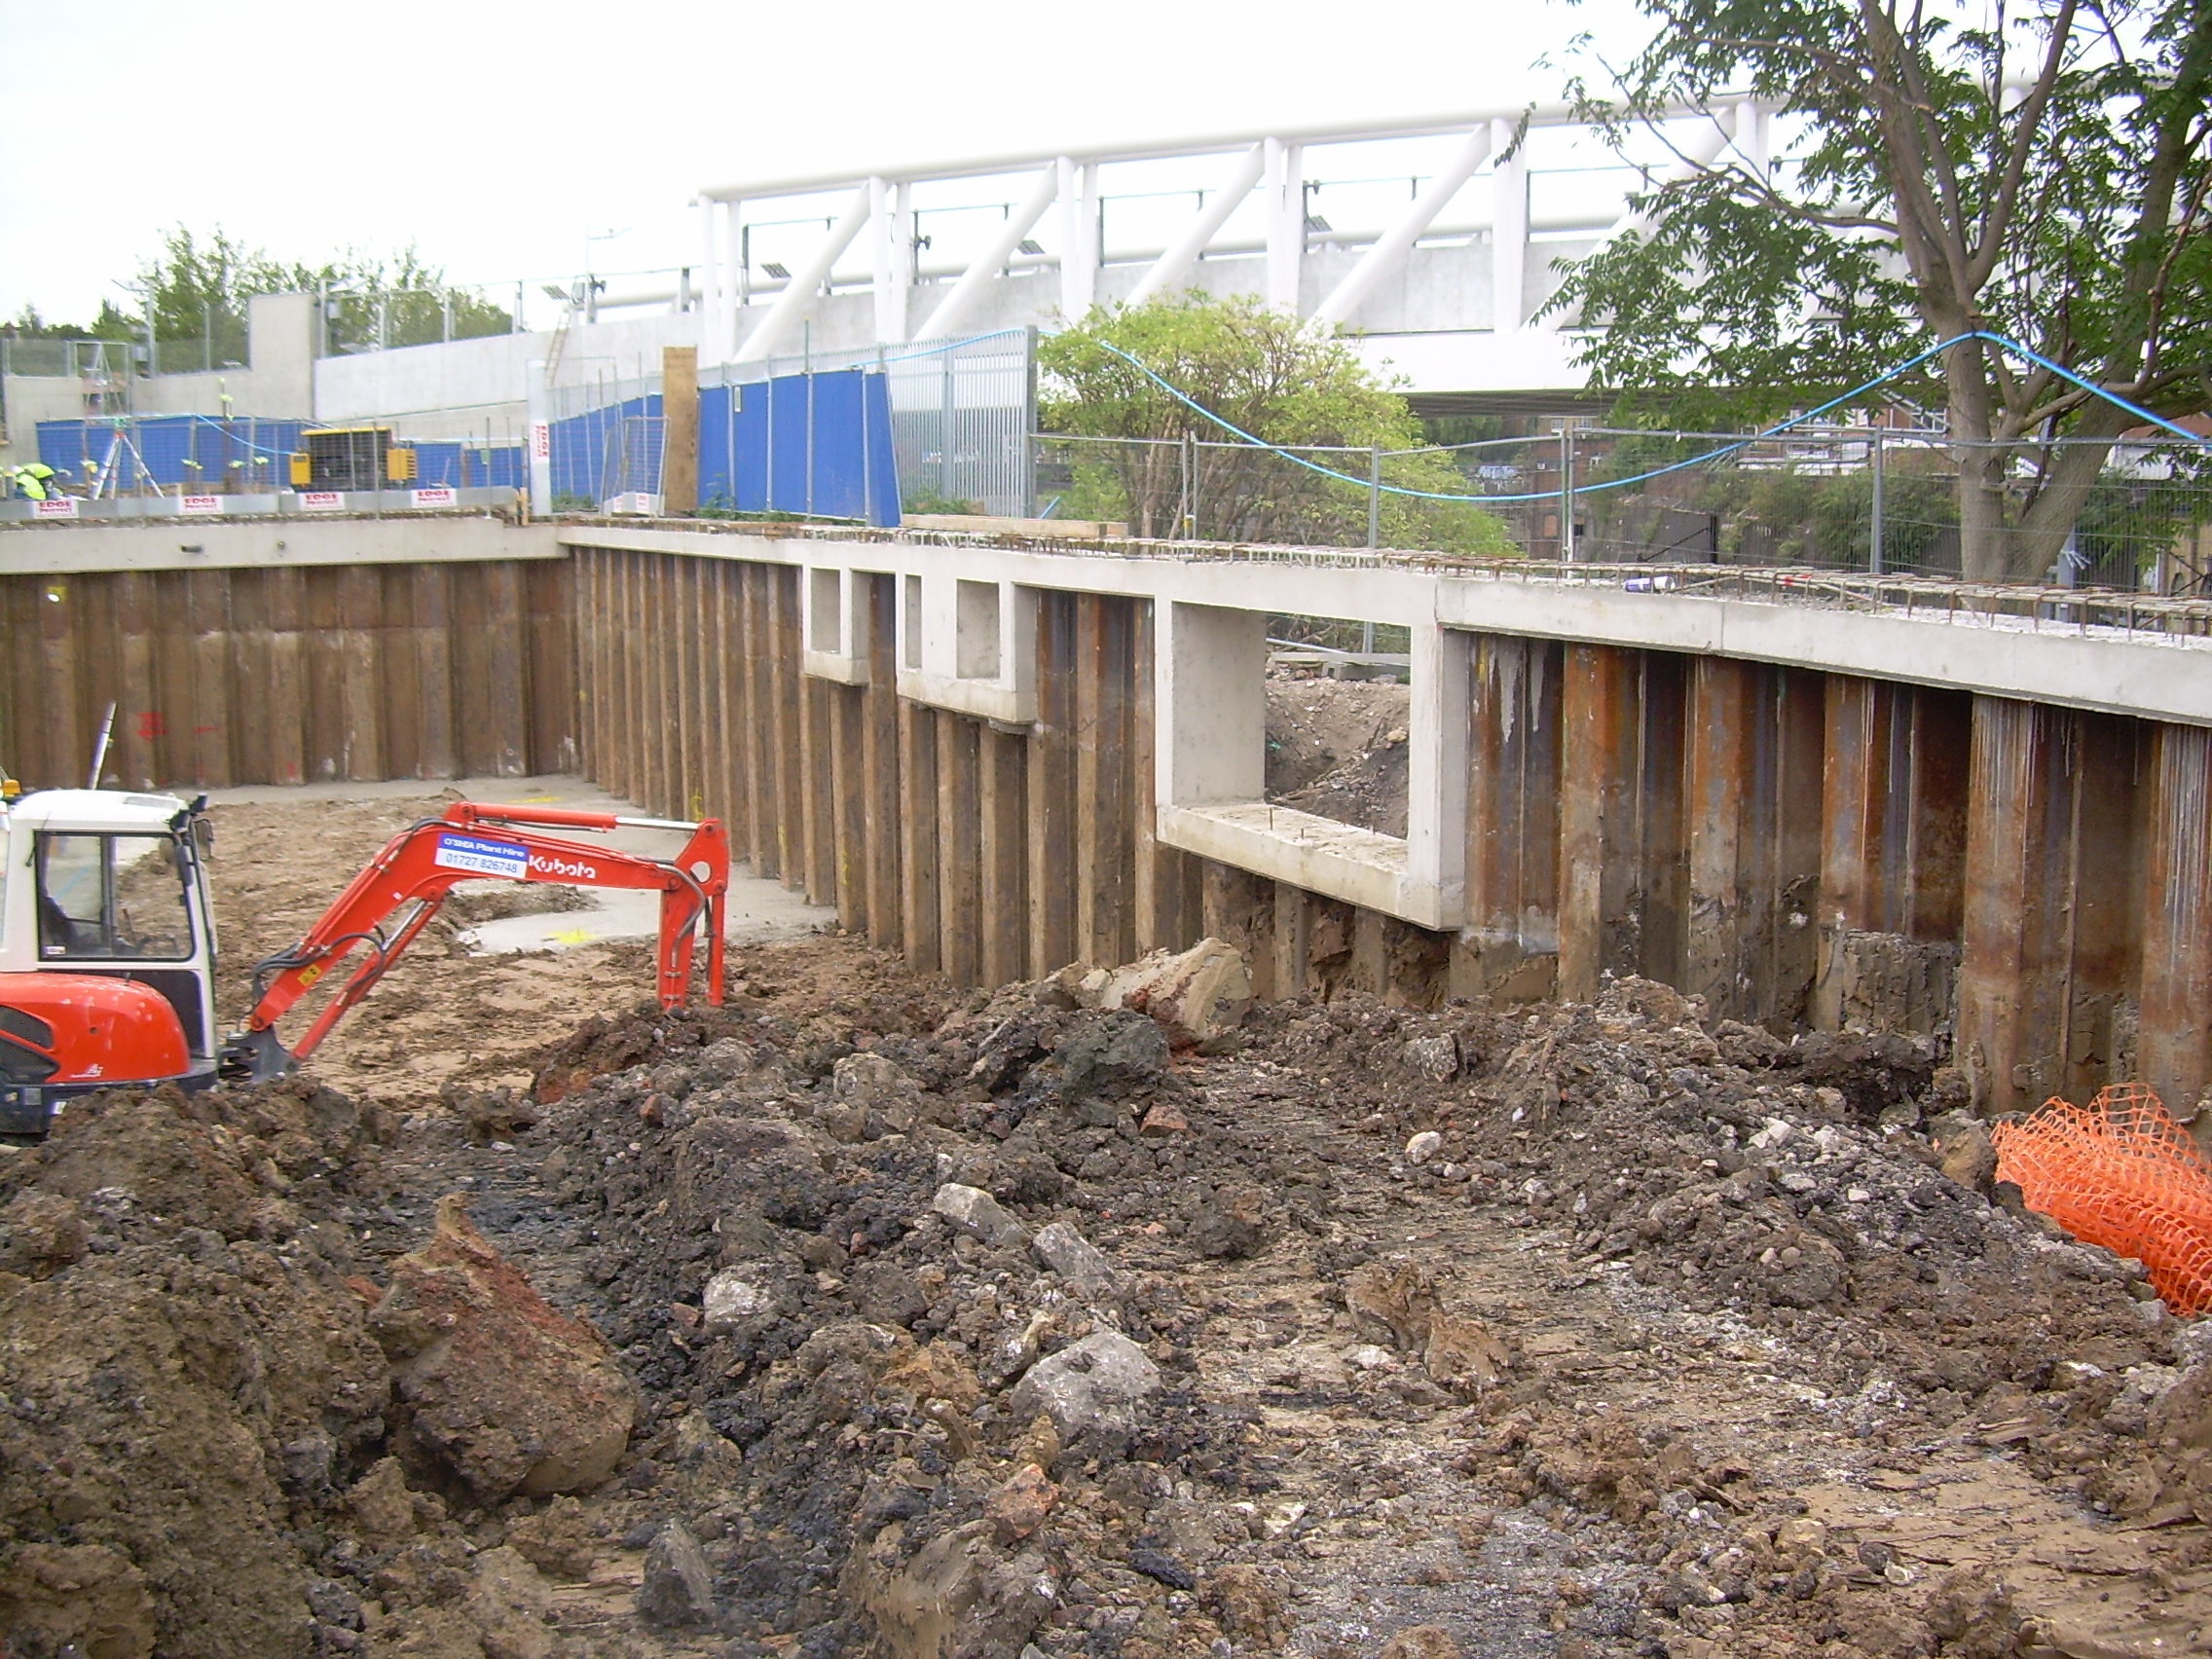 Drayton Park during construction excavation